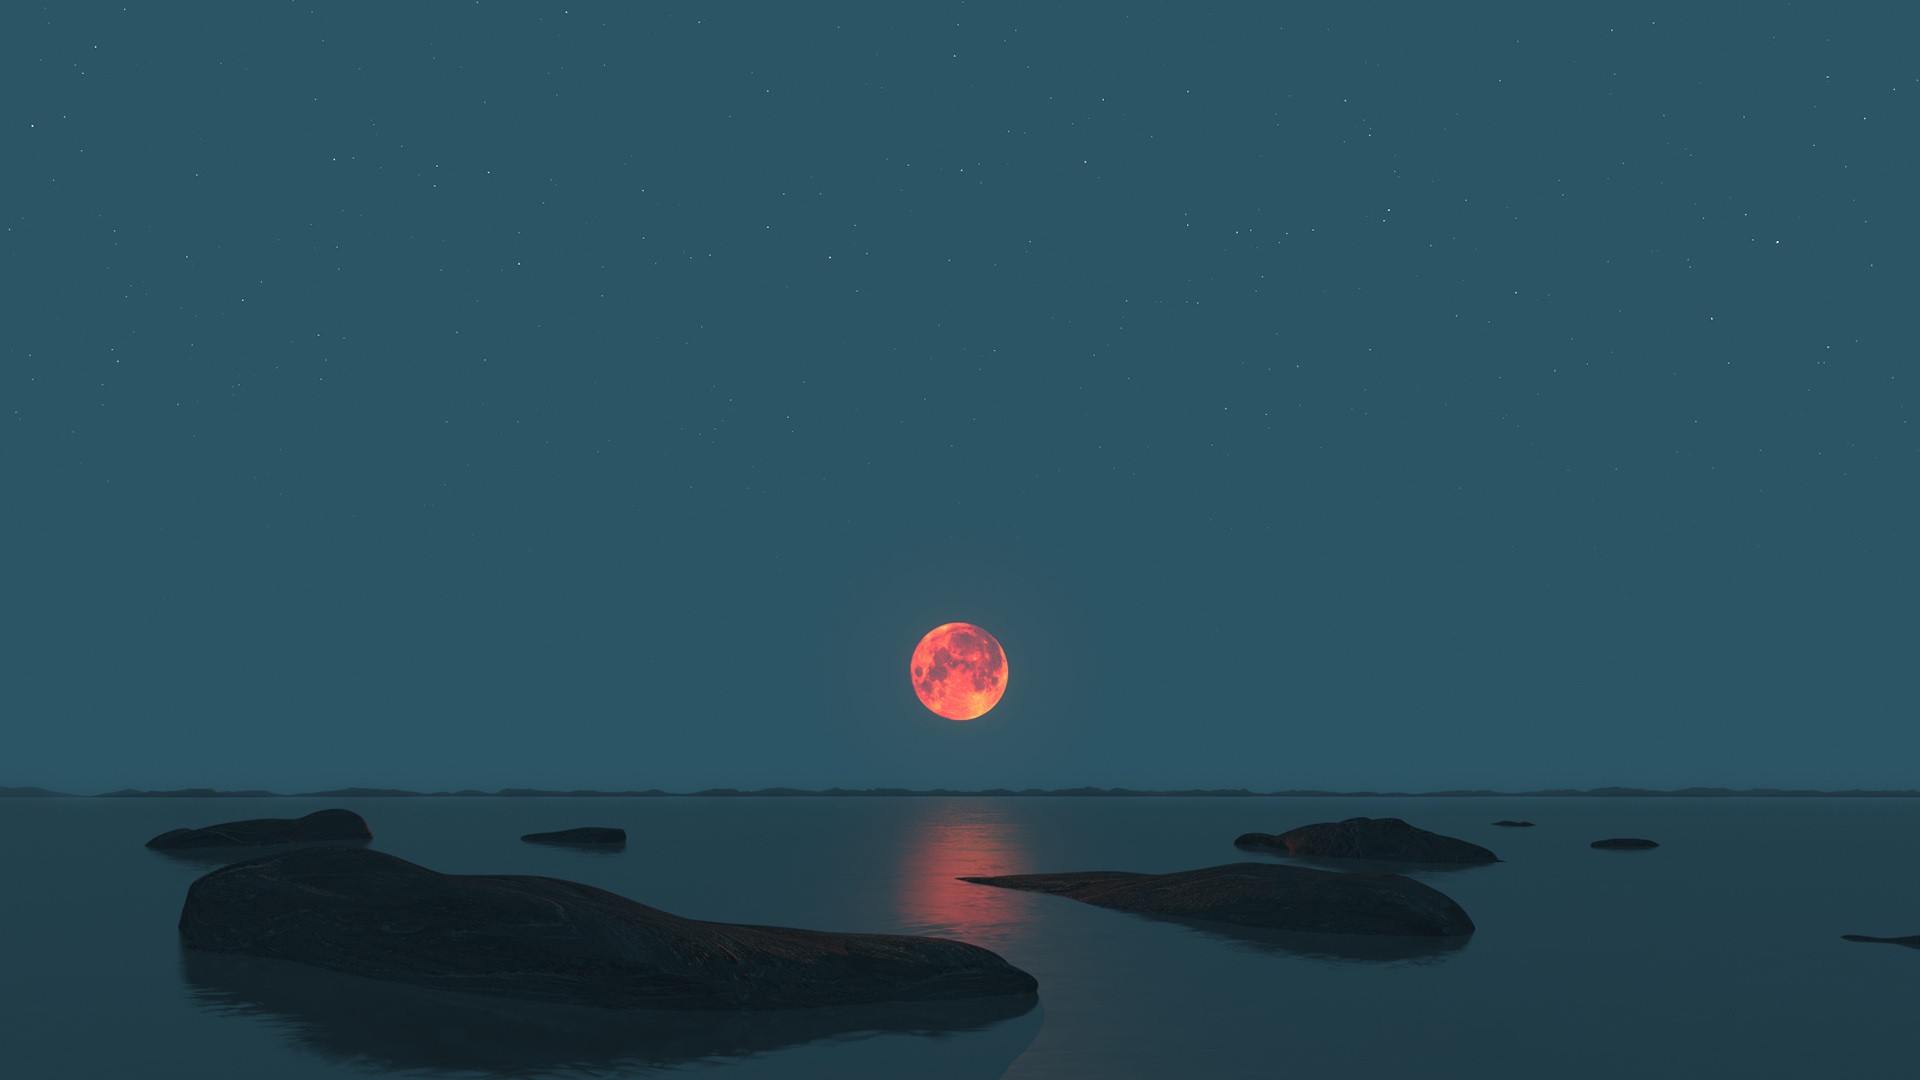 General 1920x1080 Moon sea lunar eclipses landscape photography moonlight rocks horizon nature sky full moon